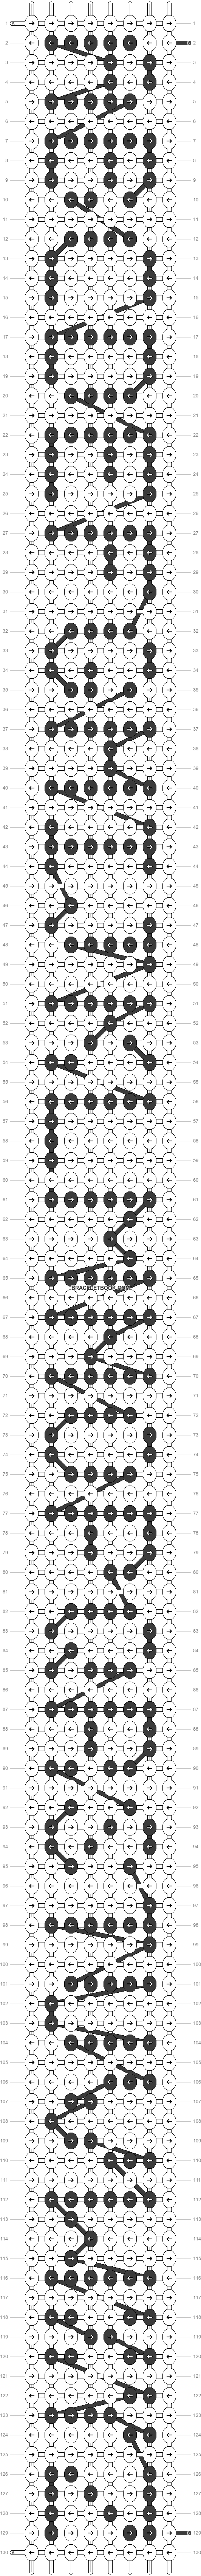 Alpha pattern #5179 variation #52778 pattern